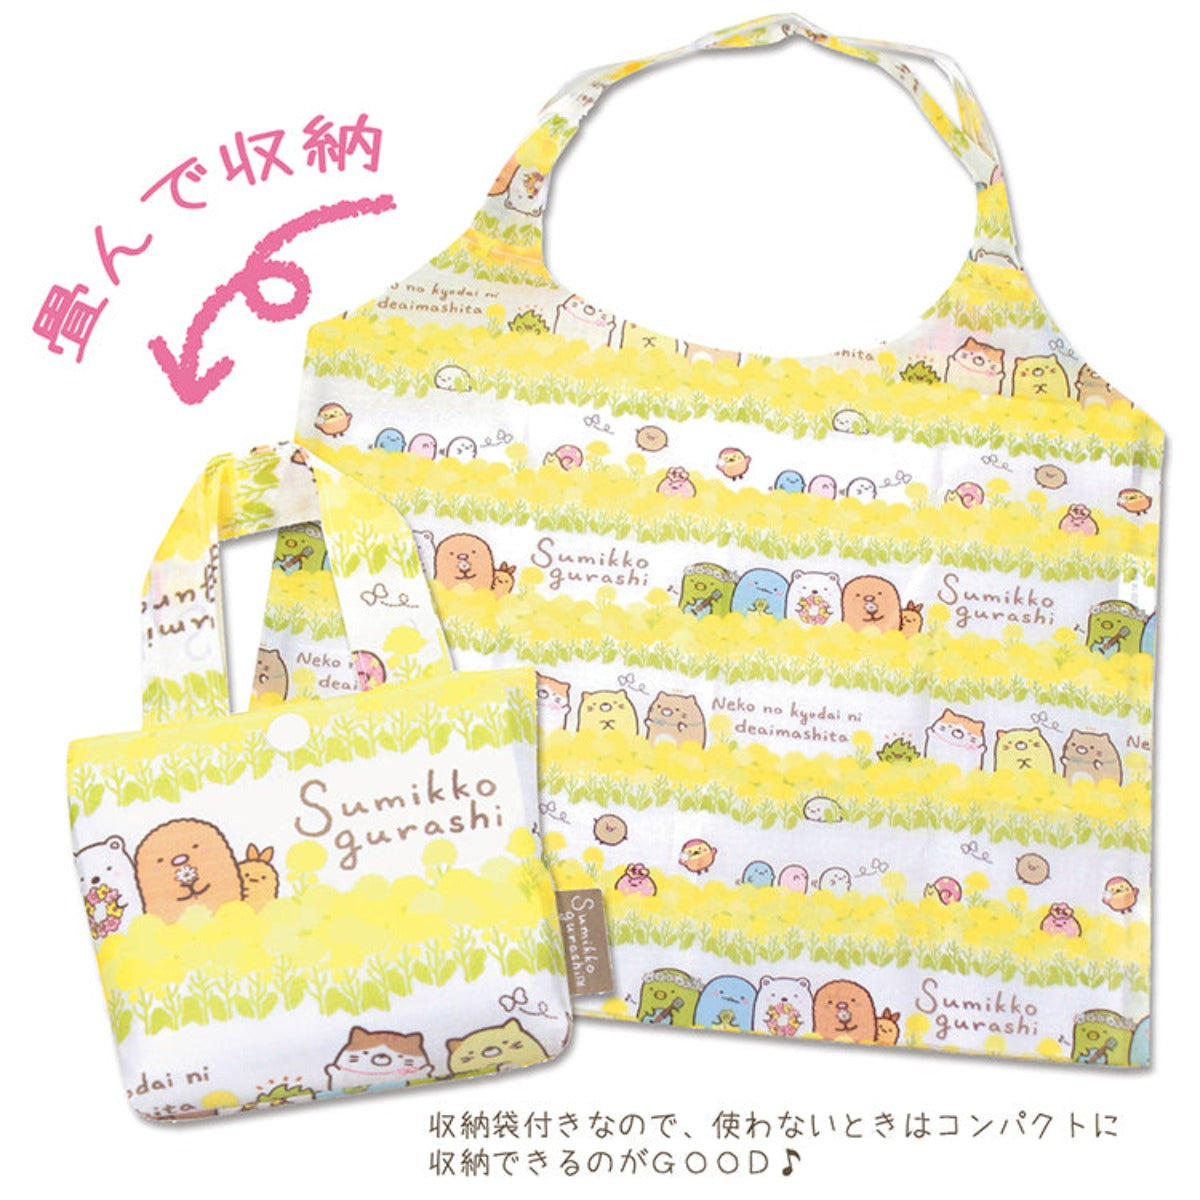 Eco Bag - Sumikko Gurashi Yellow (Japan Edition)